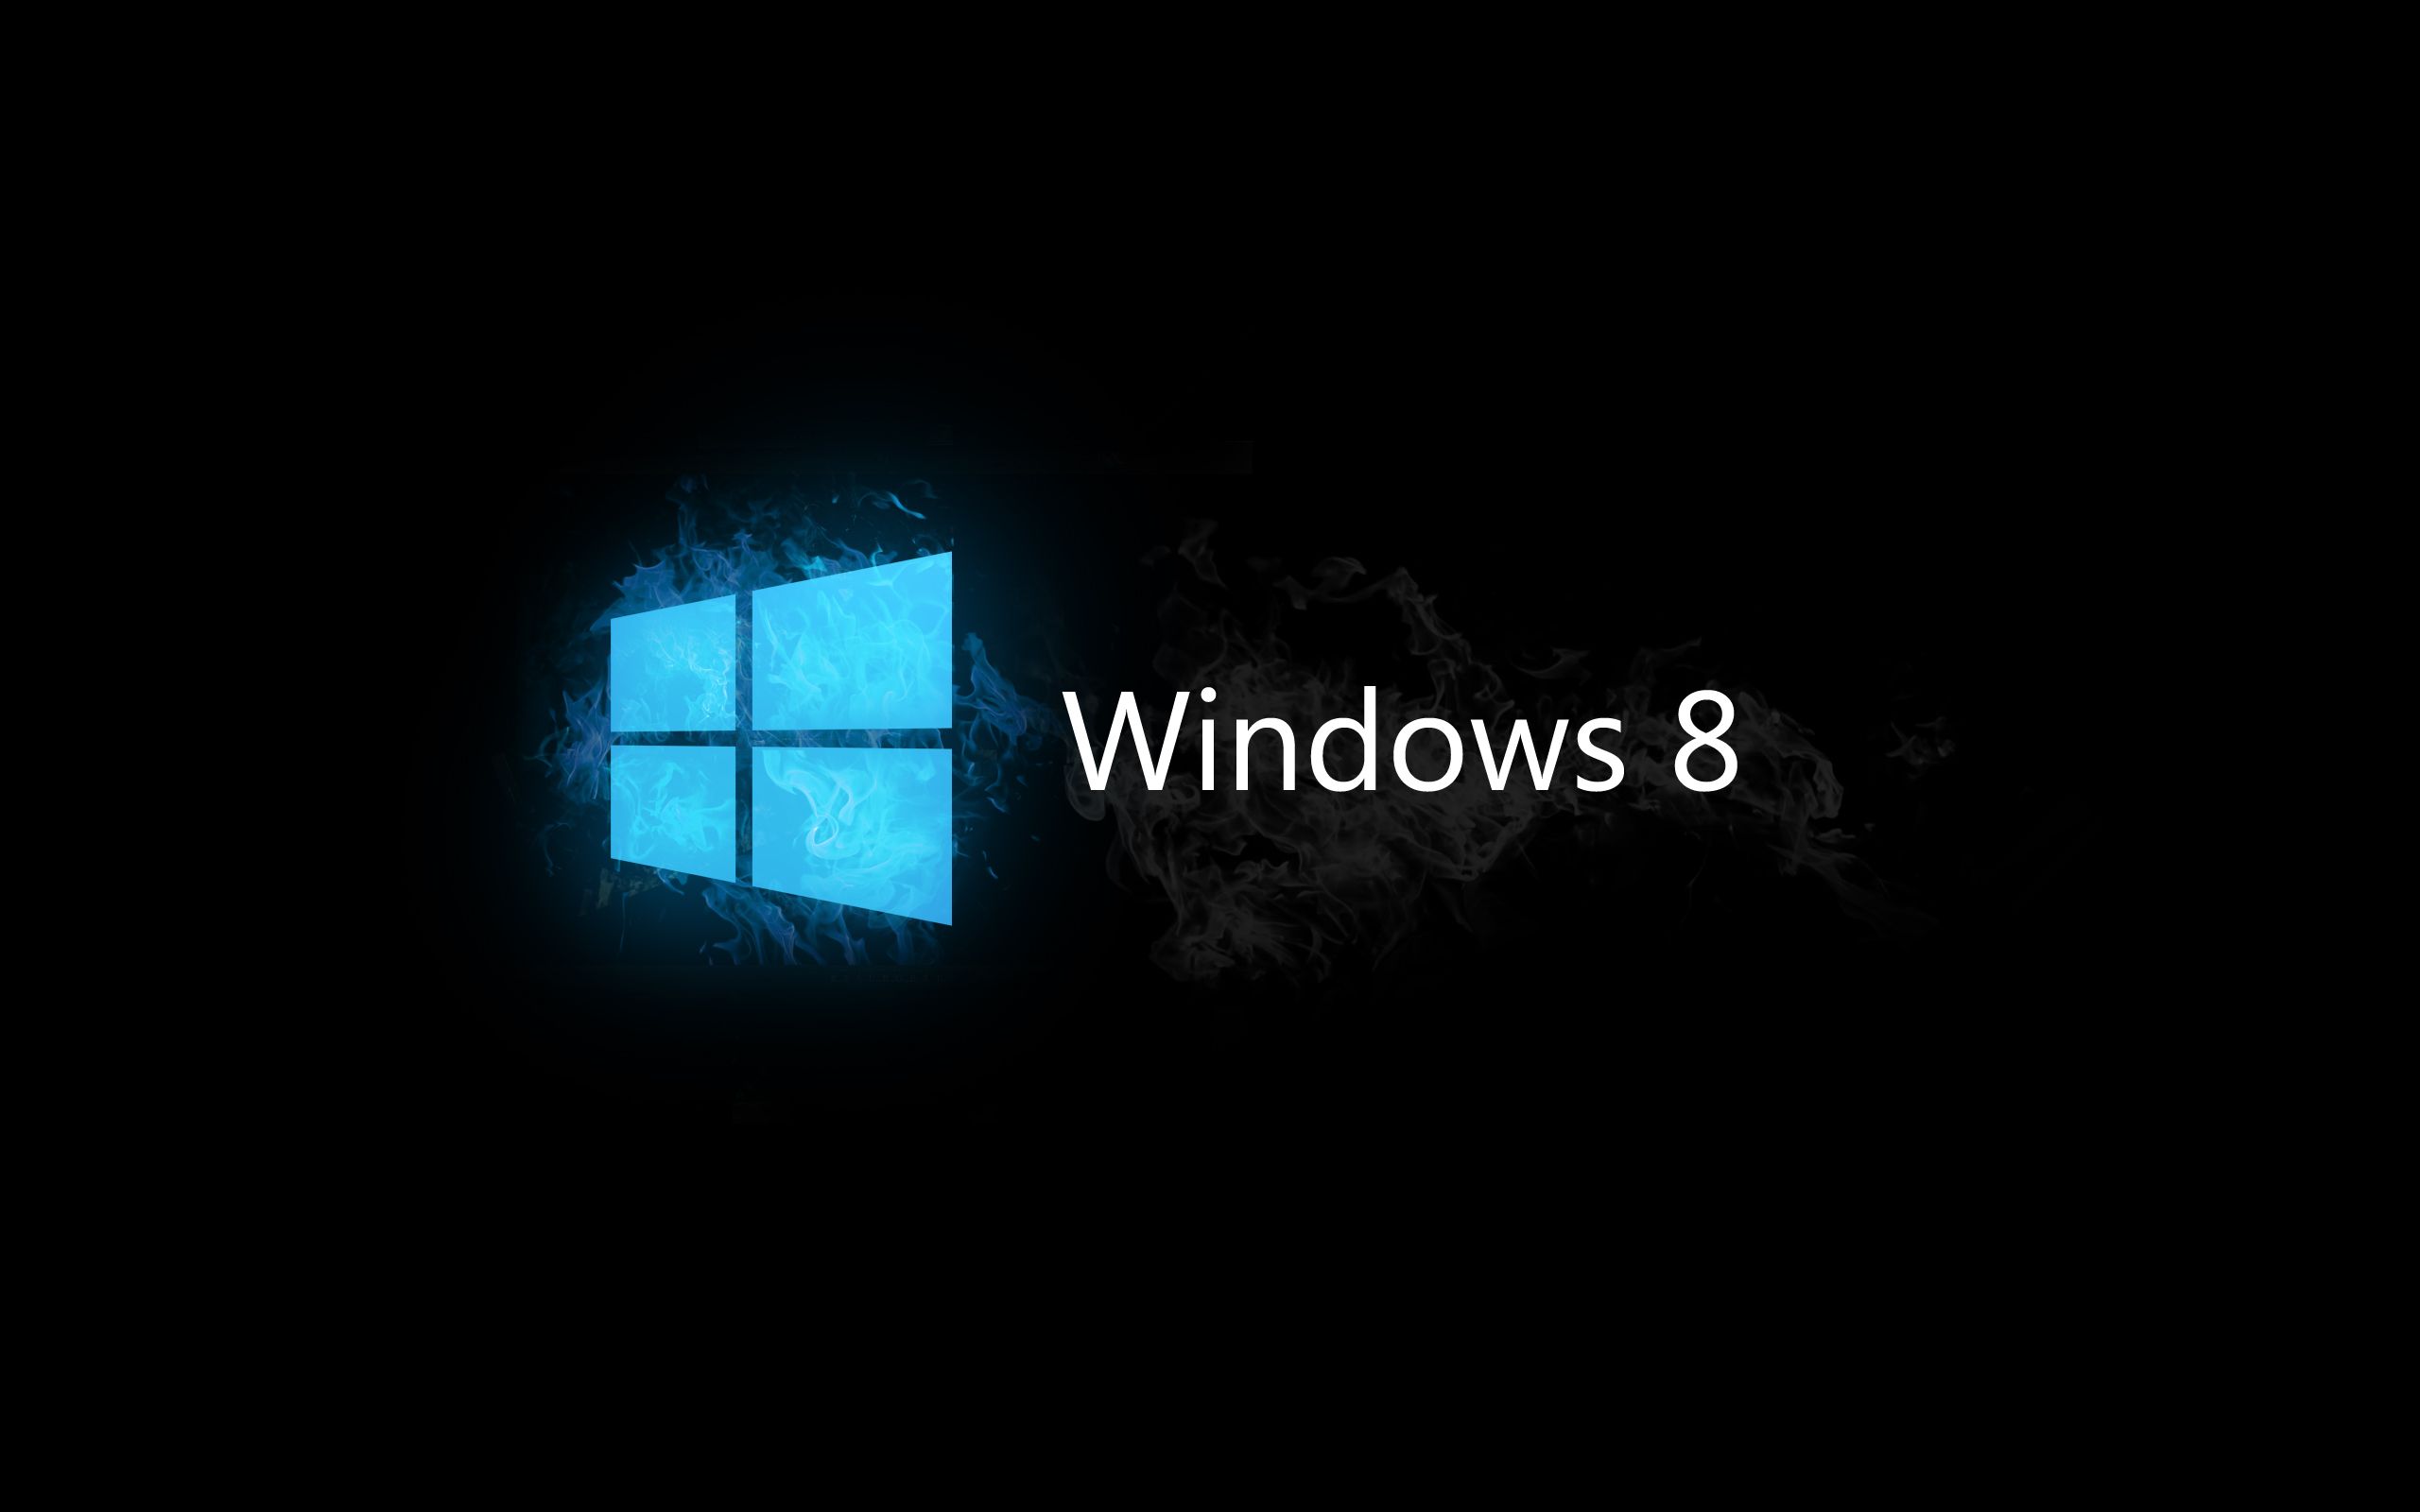 Windows 8 cool desktop backgrounds hd